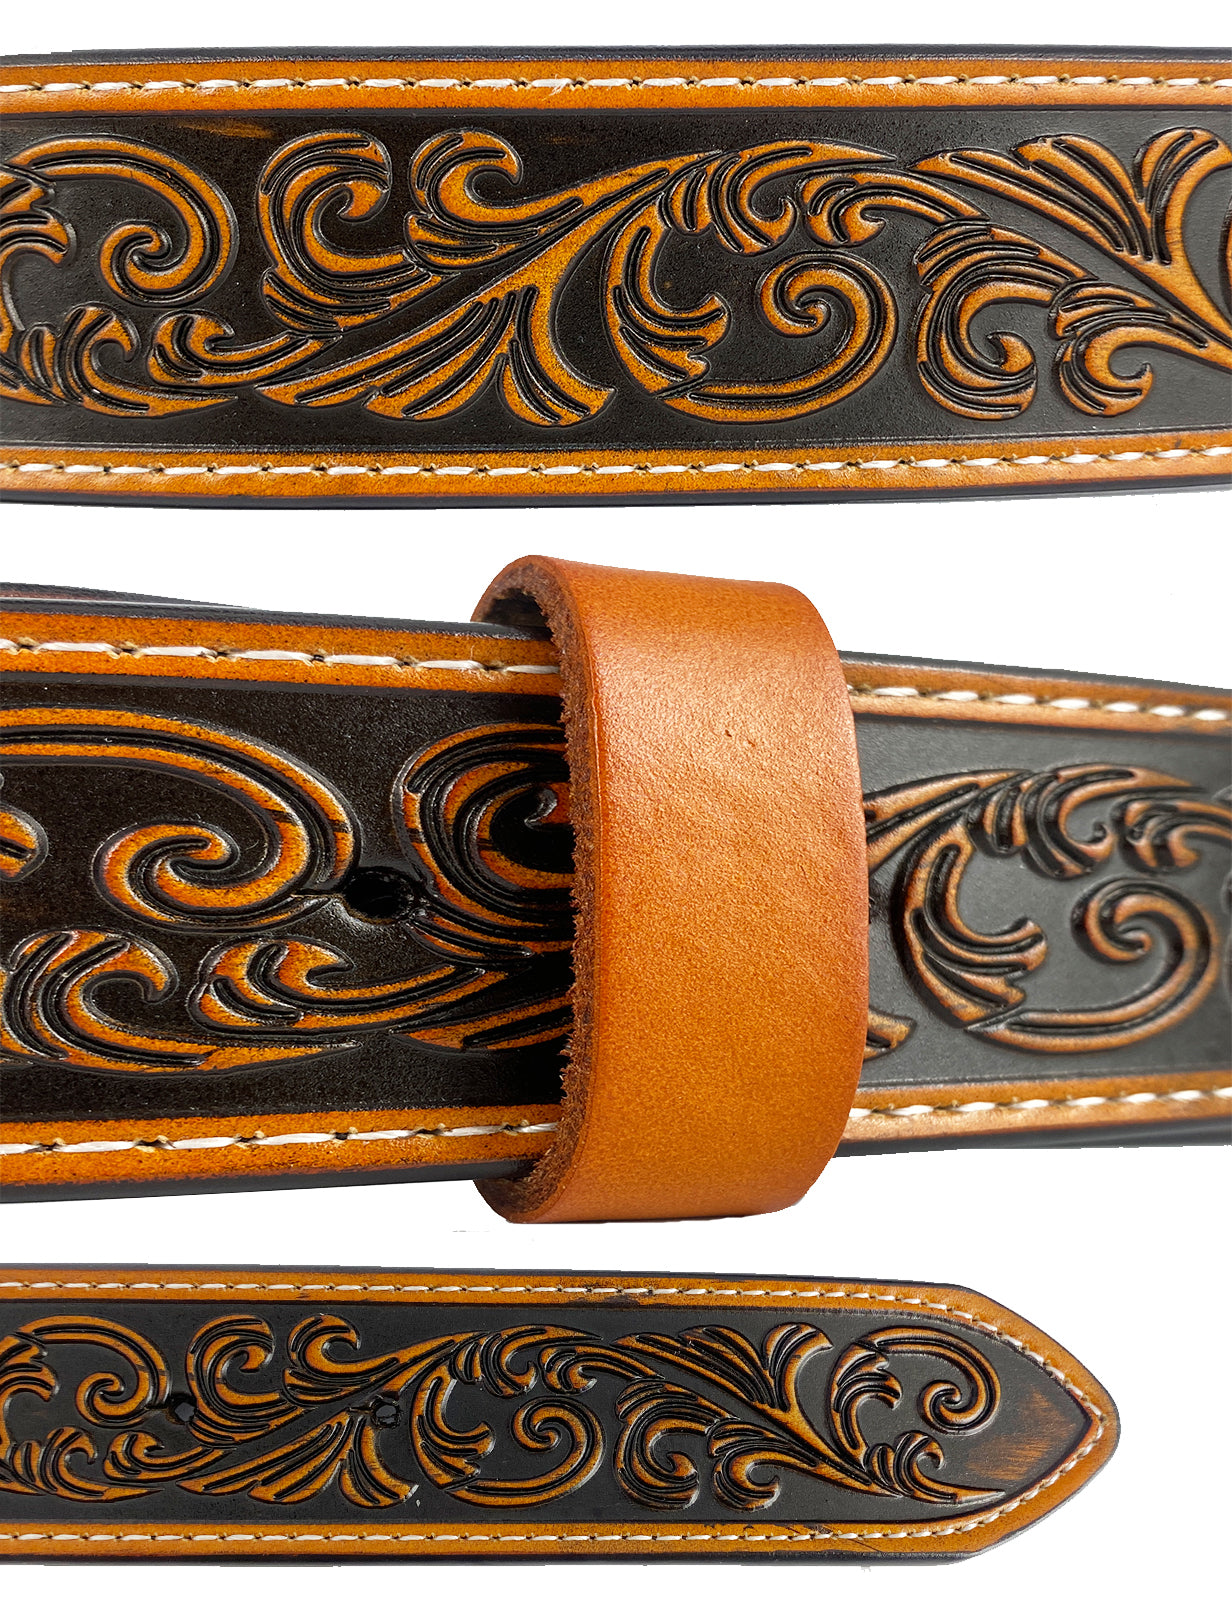 TOPACC Western Genuine Leather Pattern Tooled Belt-3D Cross Horses Prayer Buckle